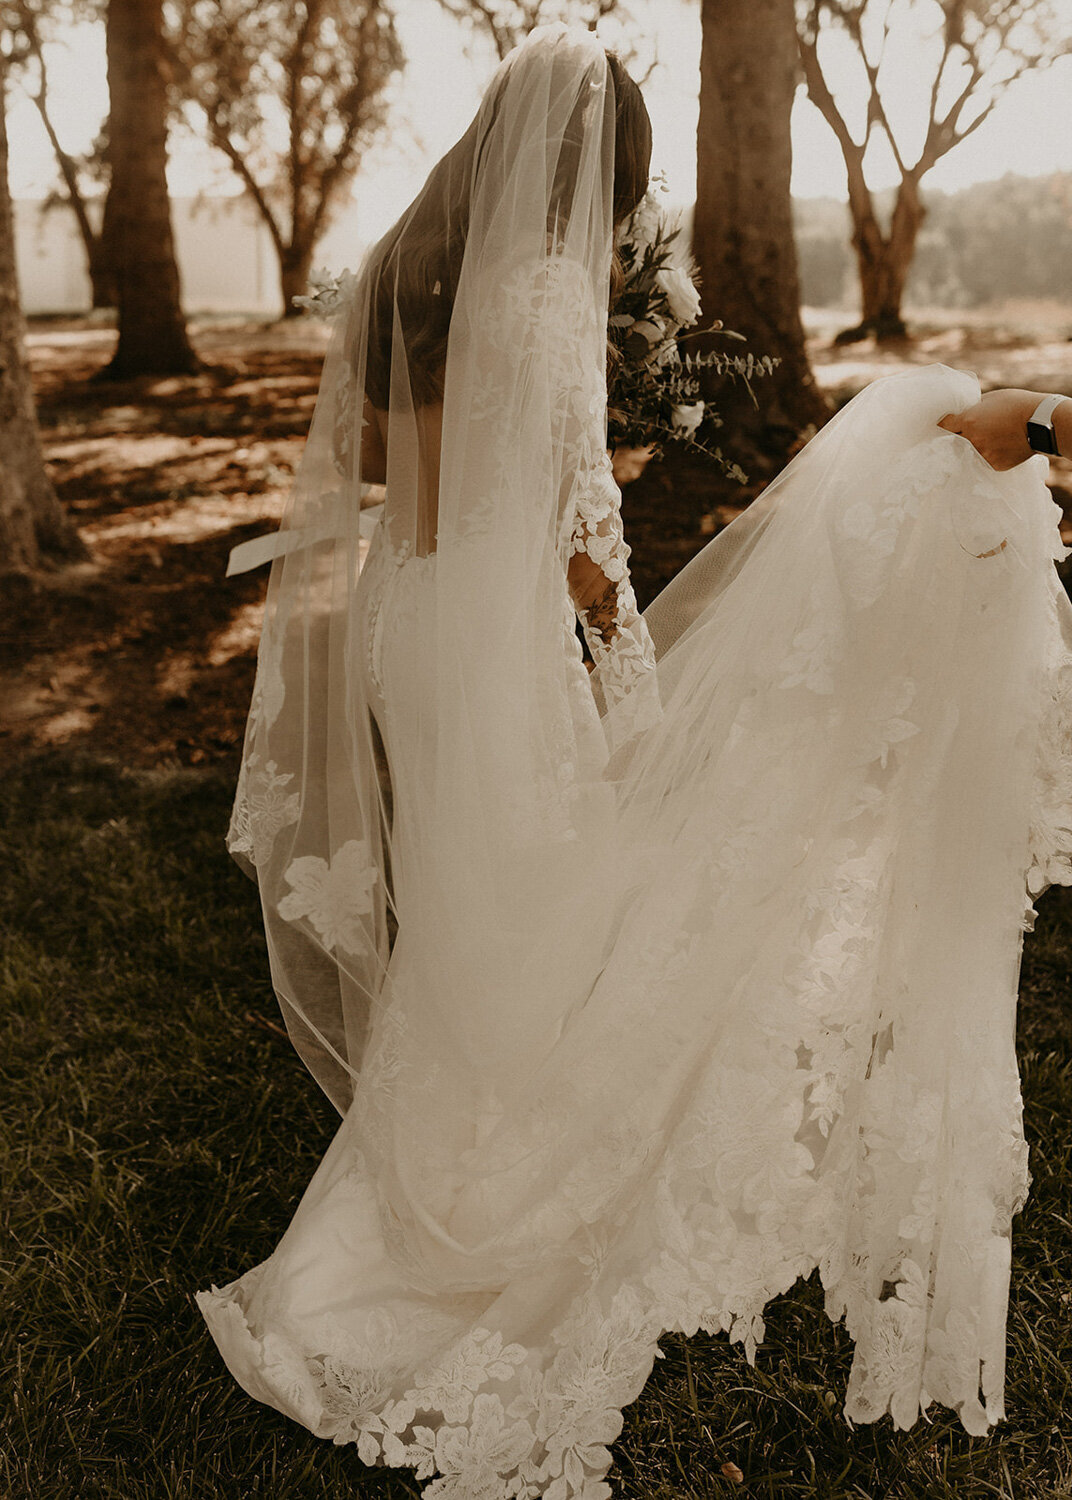 Bride wearing her elegant gown